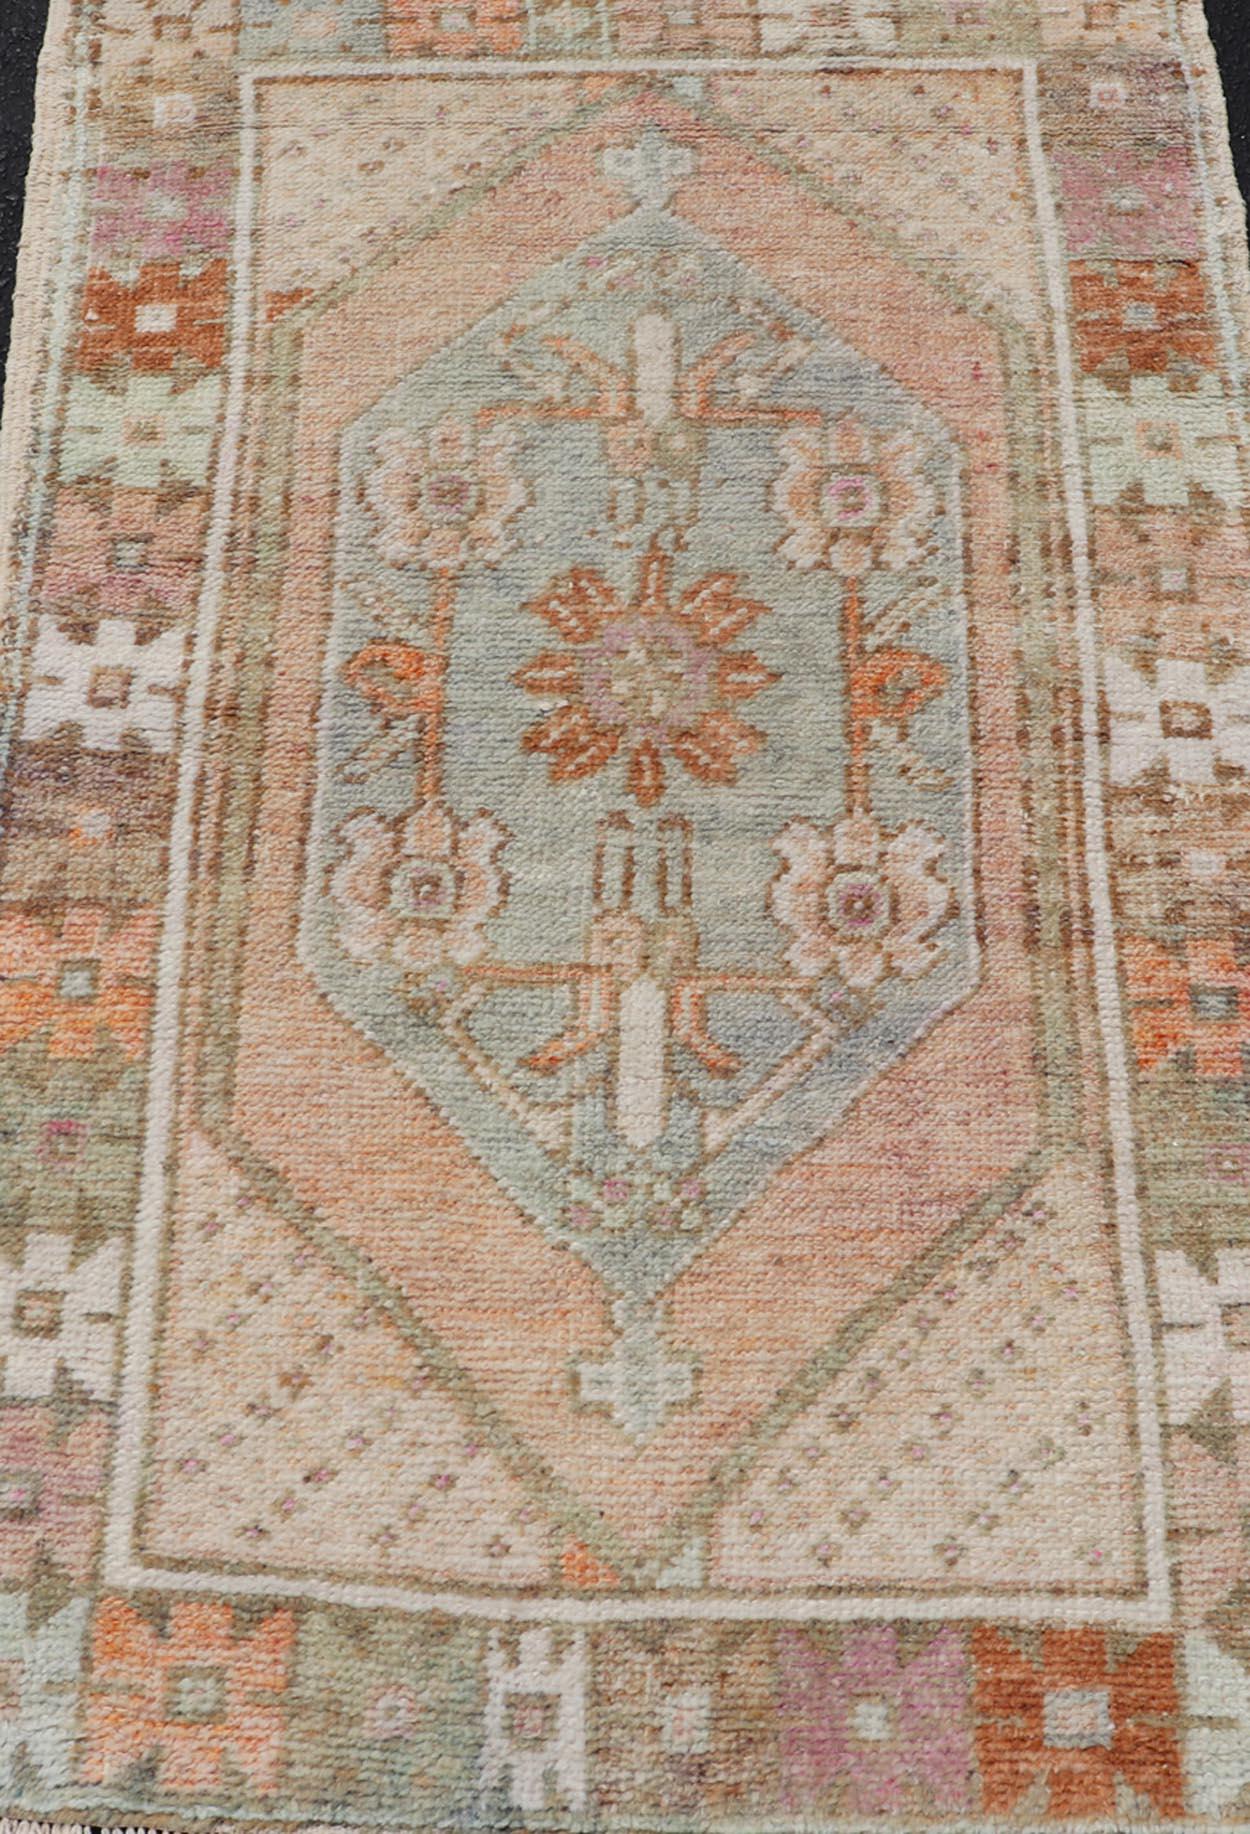 Vintage Turkish Oushak Carpet with Beautiful Floral Motifs in Tan, Camel, Orange For Sale 2